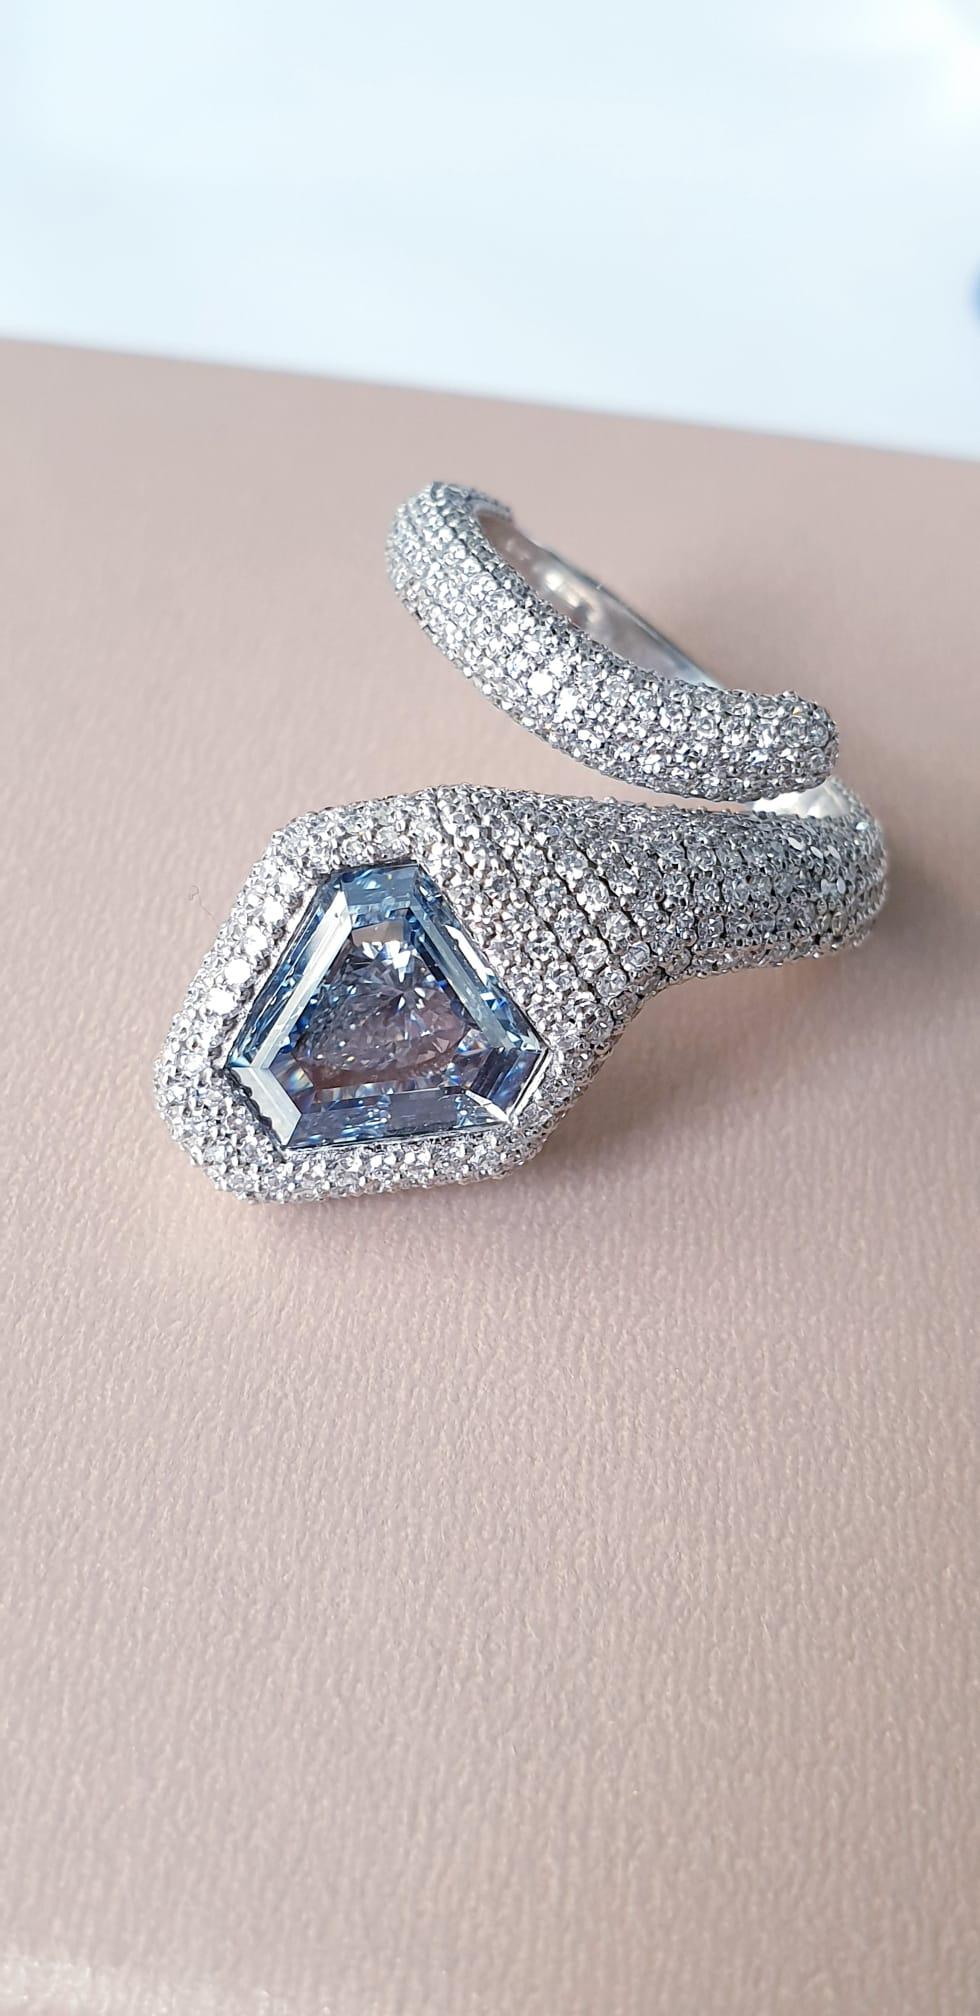 Shield Cut Emilio Jewelry Gia Certified 1.25 Carat Fancy Intense Pure Blue Diamond Ring For Sale